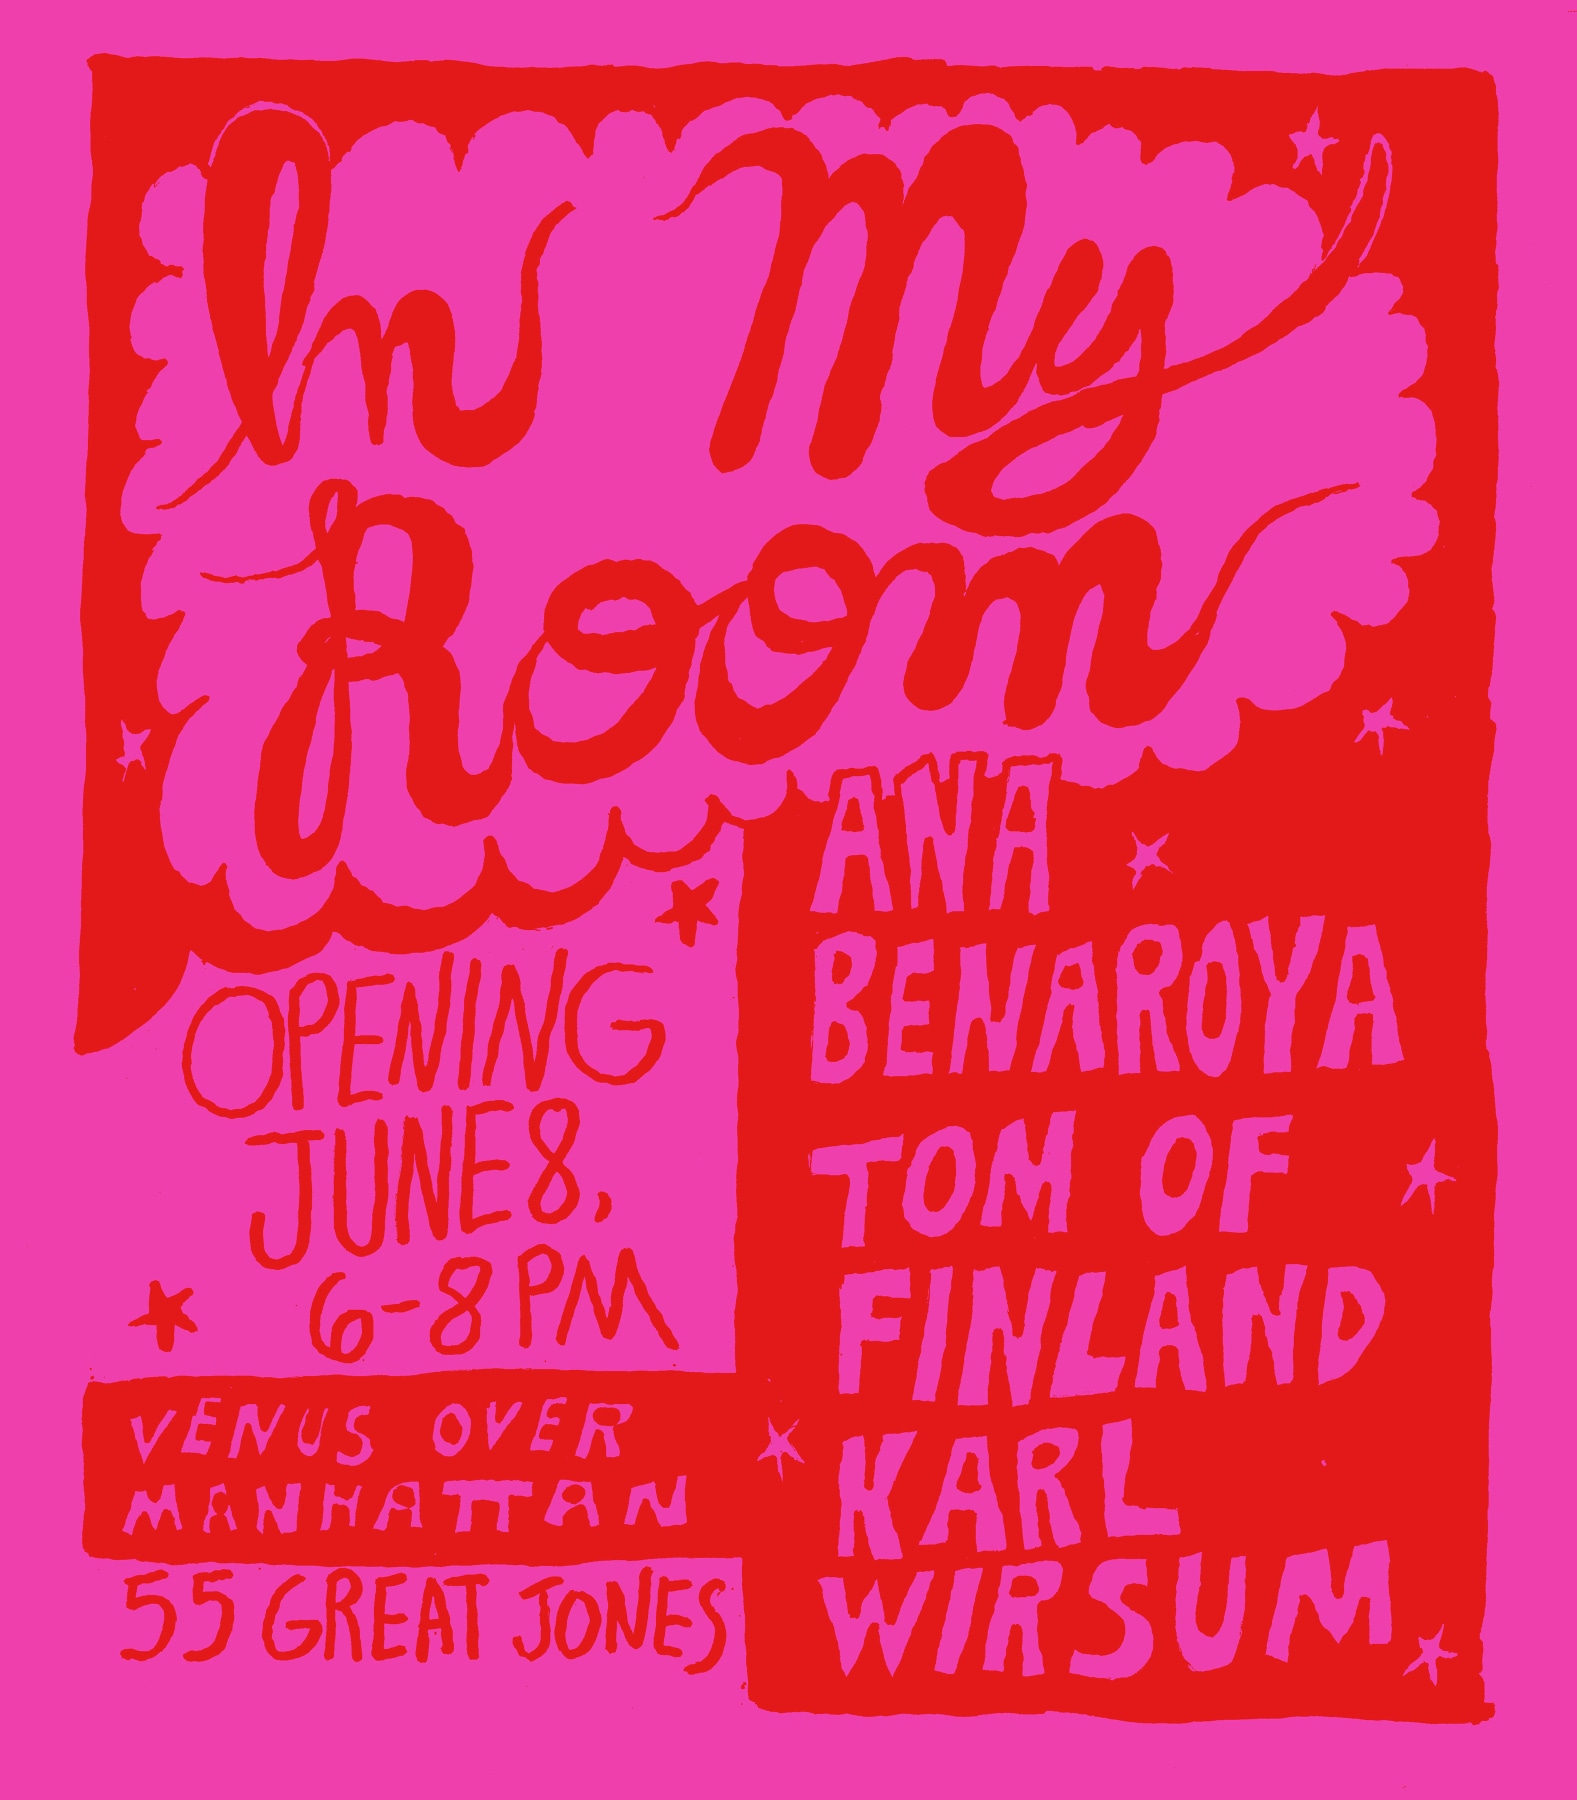 In My Room: Ana Benaroya, Tom of Finland, Karl Wirsum
Opening: Thursday, June 8, 2023
55 Great Jones Street

Image Link